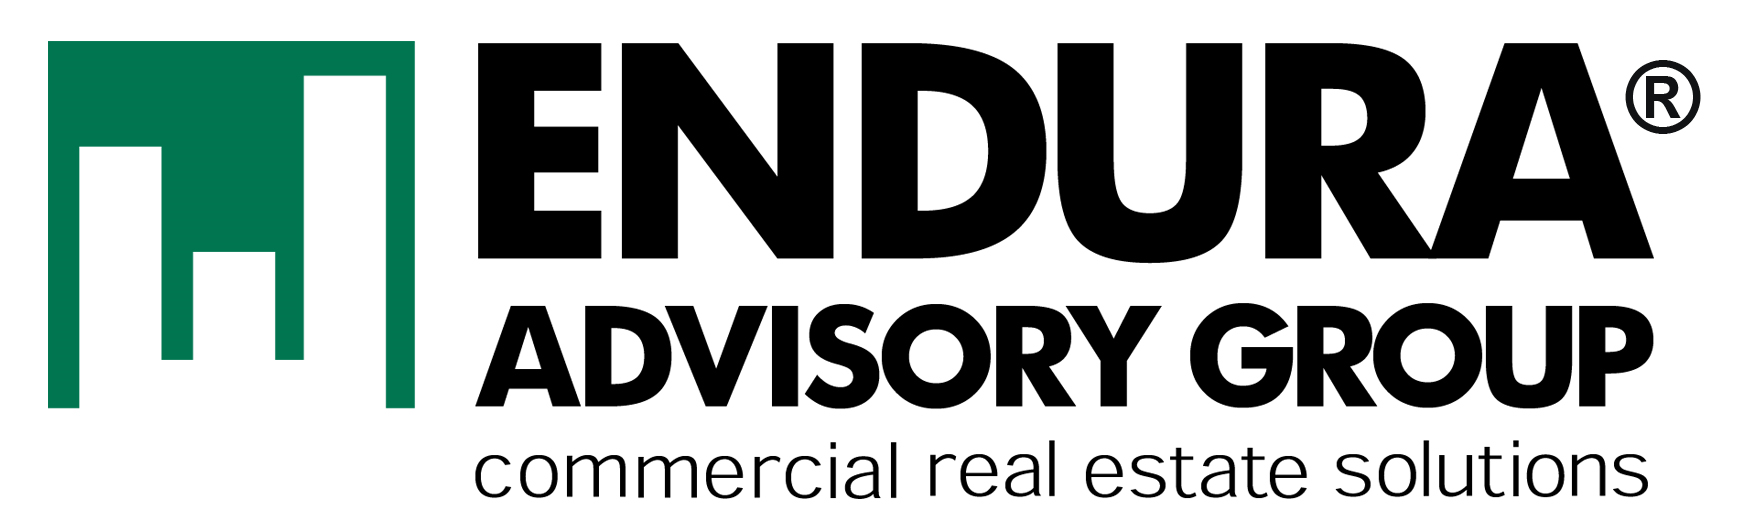 Endura Advisory Group Company Logo